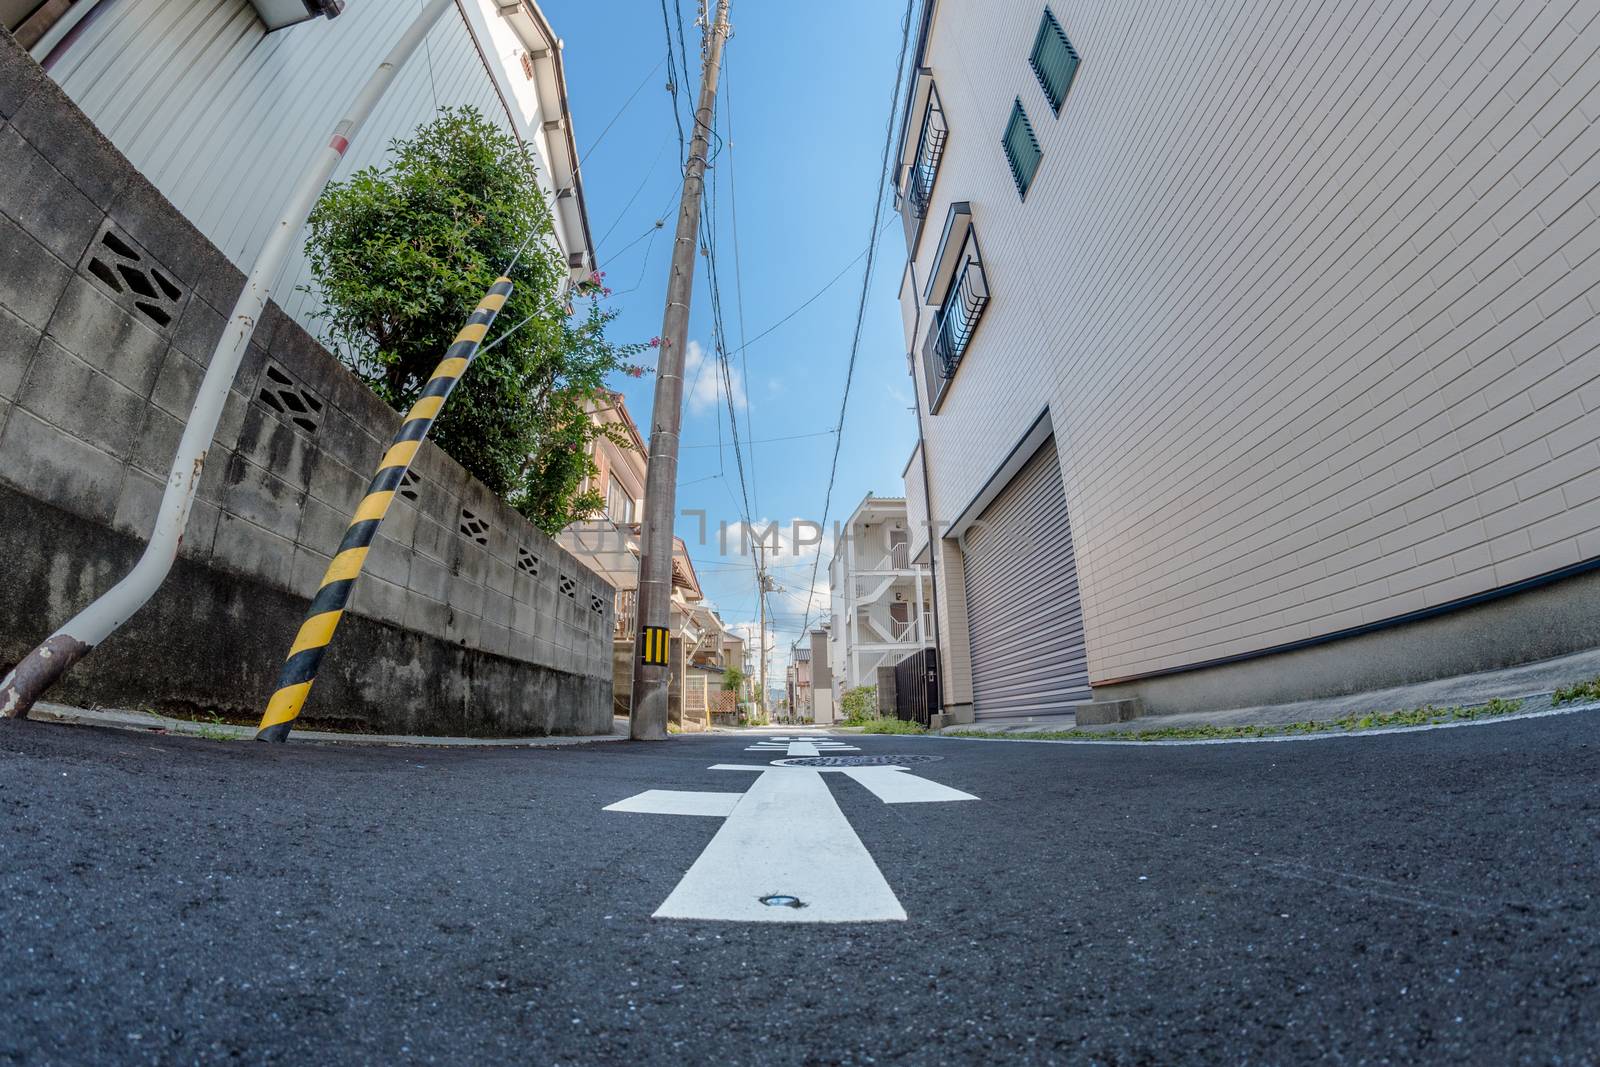 Street in Japan by justtscott